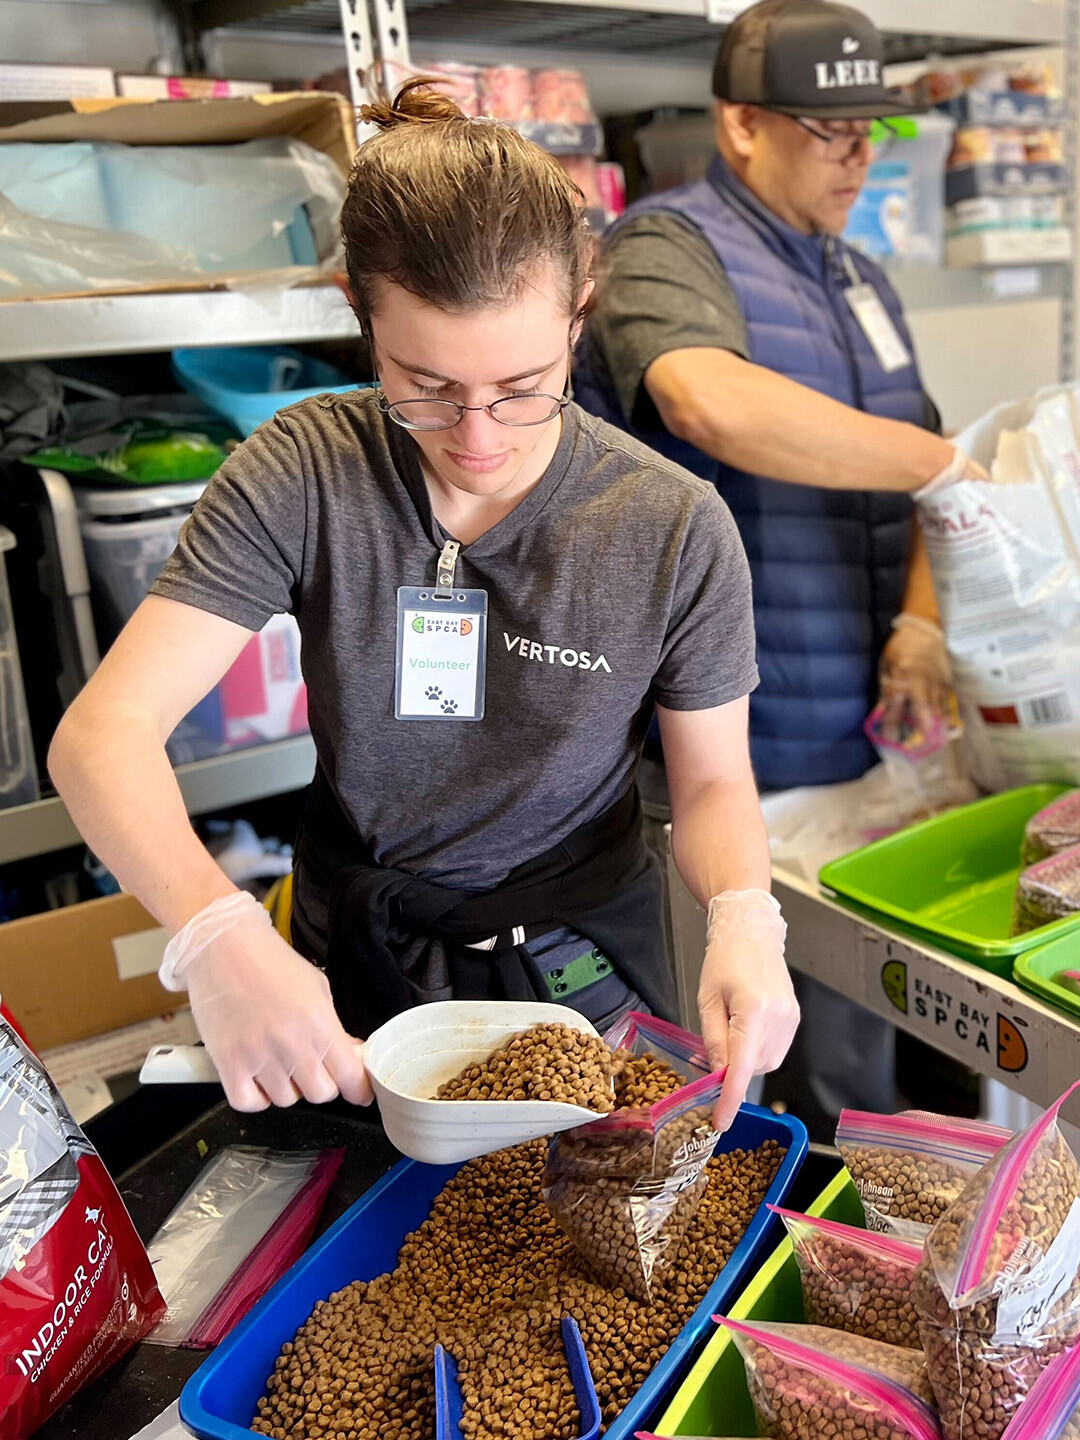 Emmet scoops dog kibble into a ziploc bag for the East Bay SPCA's food pantry